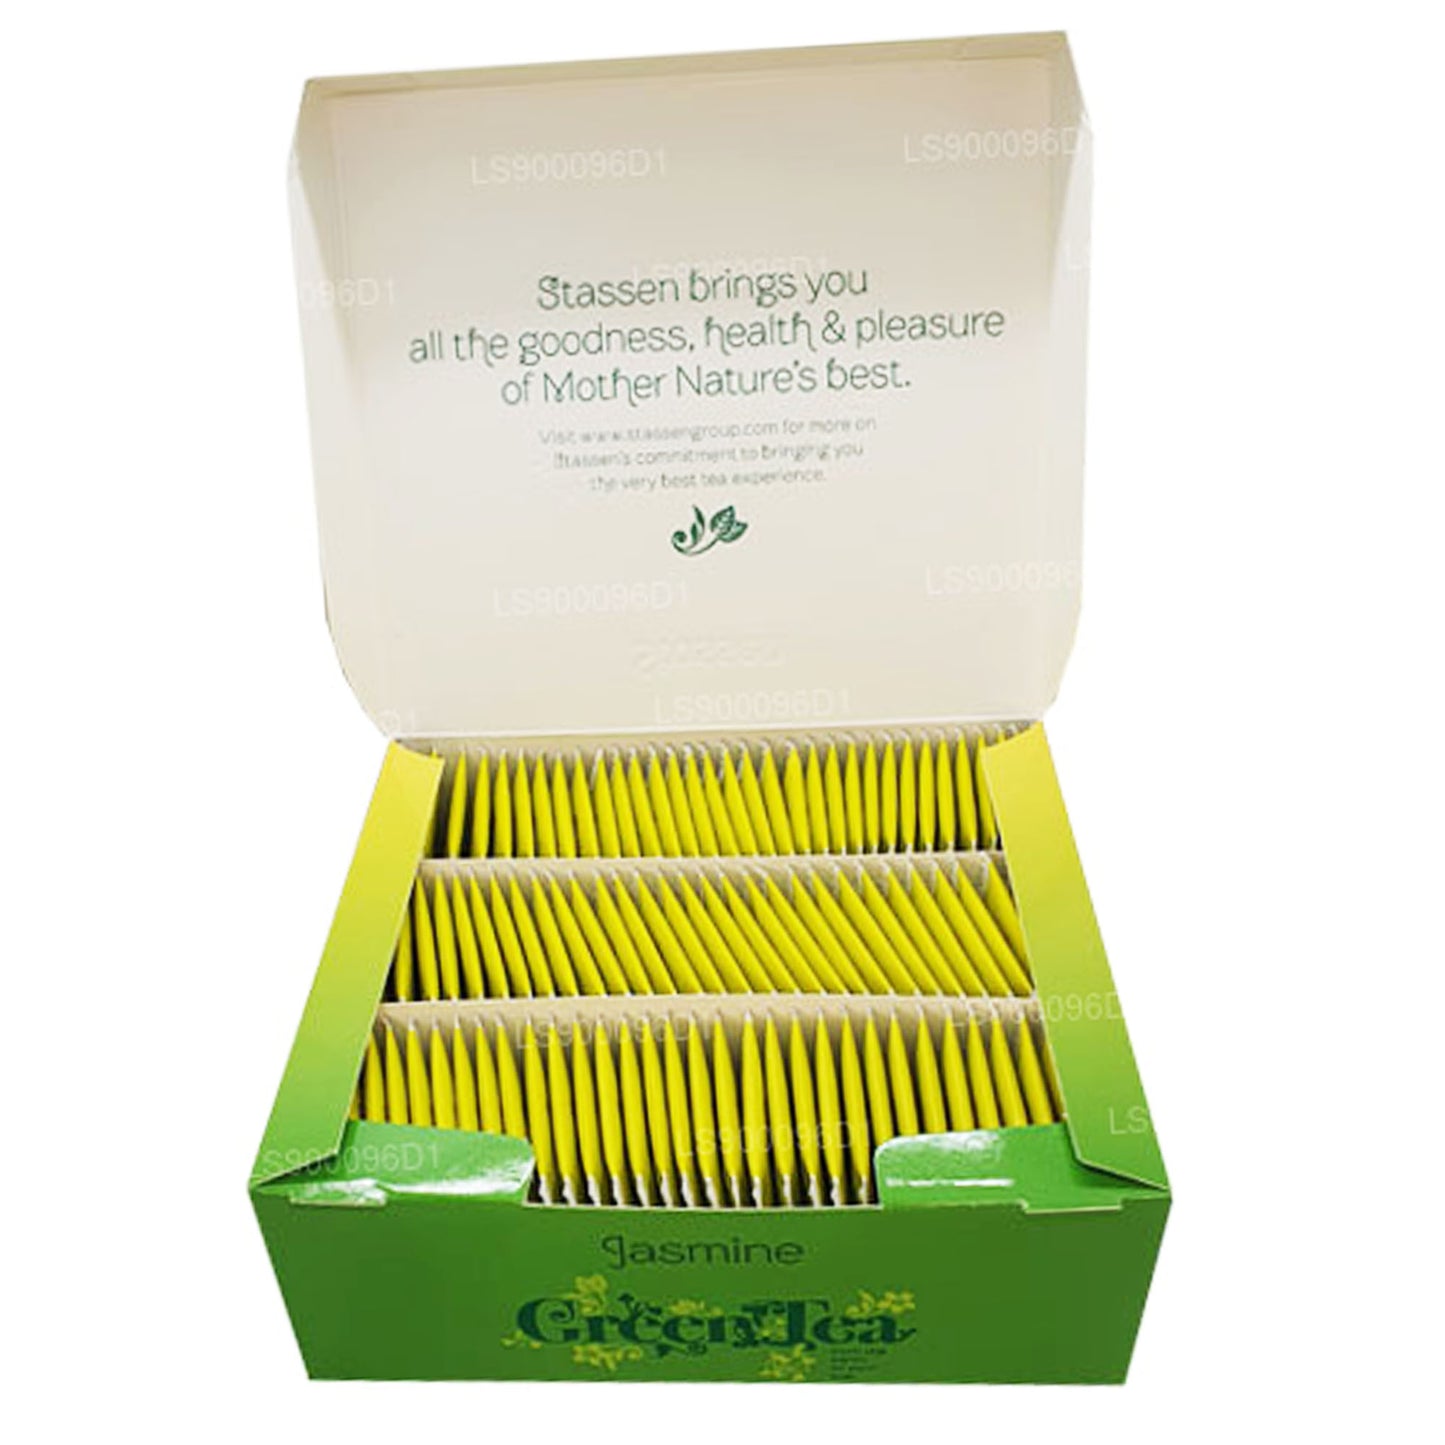 Tè verde al gelsomino Stassen (150 g) 100 bustine di tè